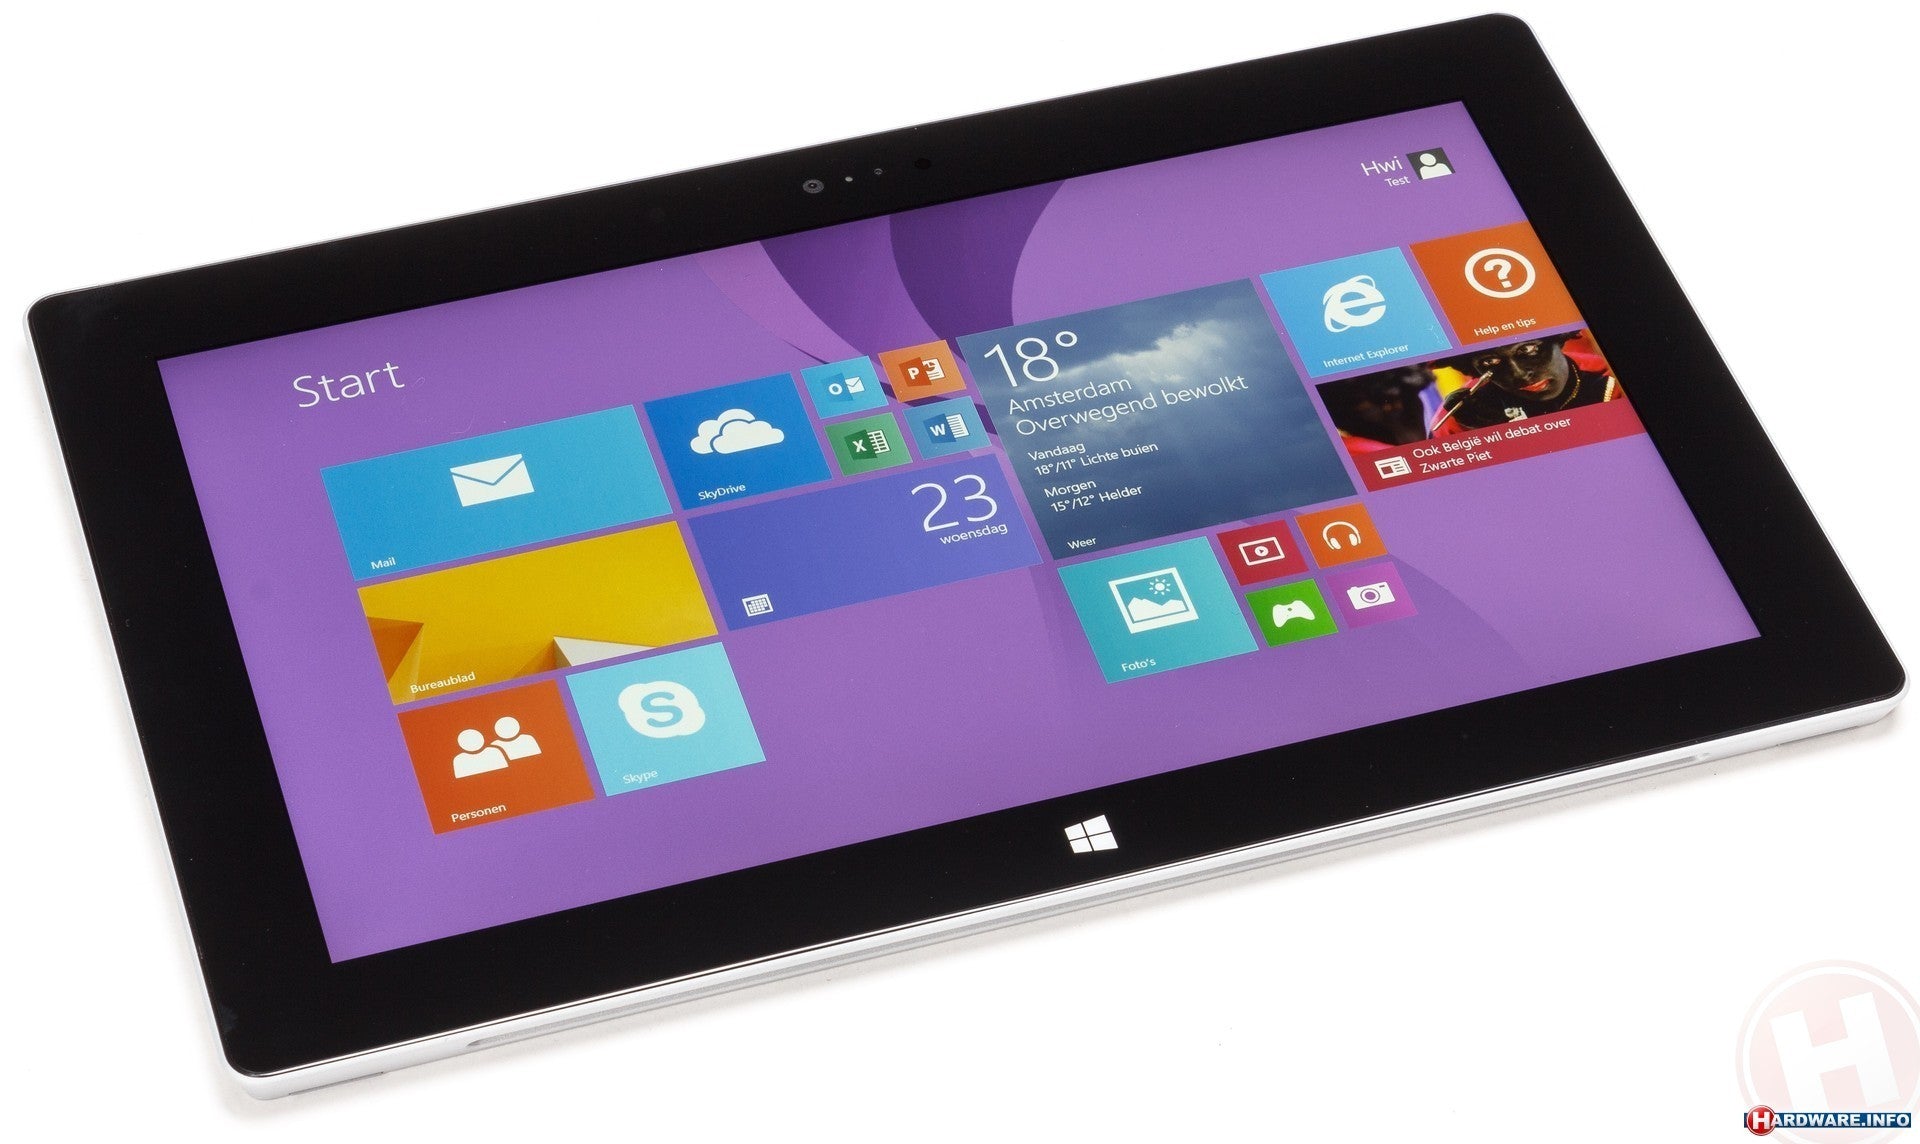 Microsoft Surface 2 RT (32 GB) | NJ Accessory/Buy Direct & Save